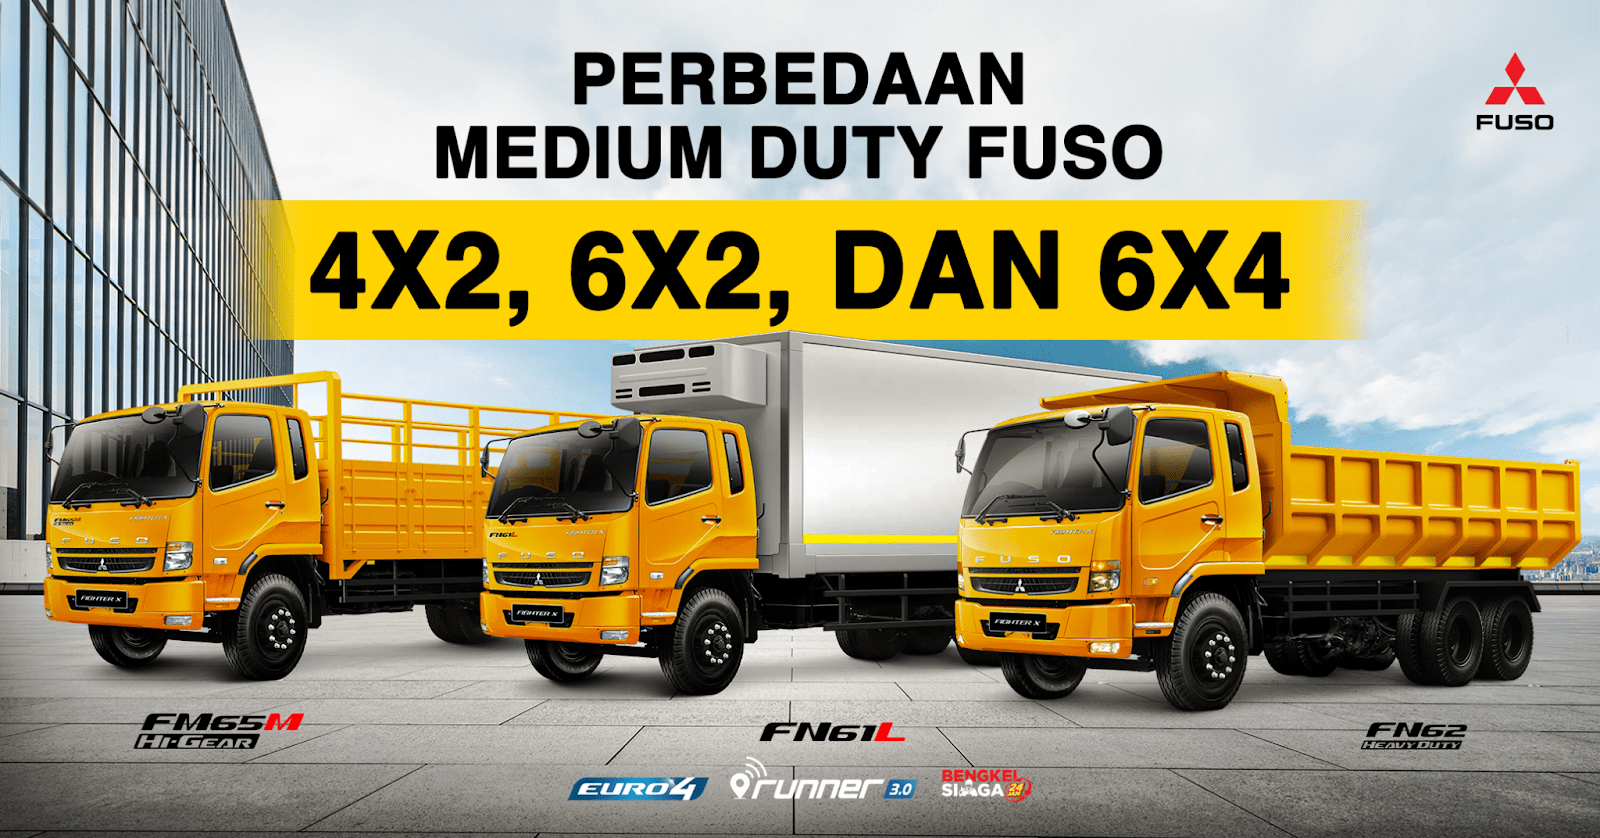 Perbedaan Medium Duty Fuso 4×2, 6×2, dan 6×4